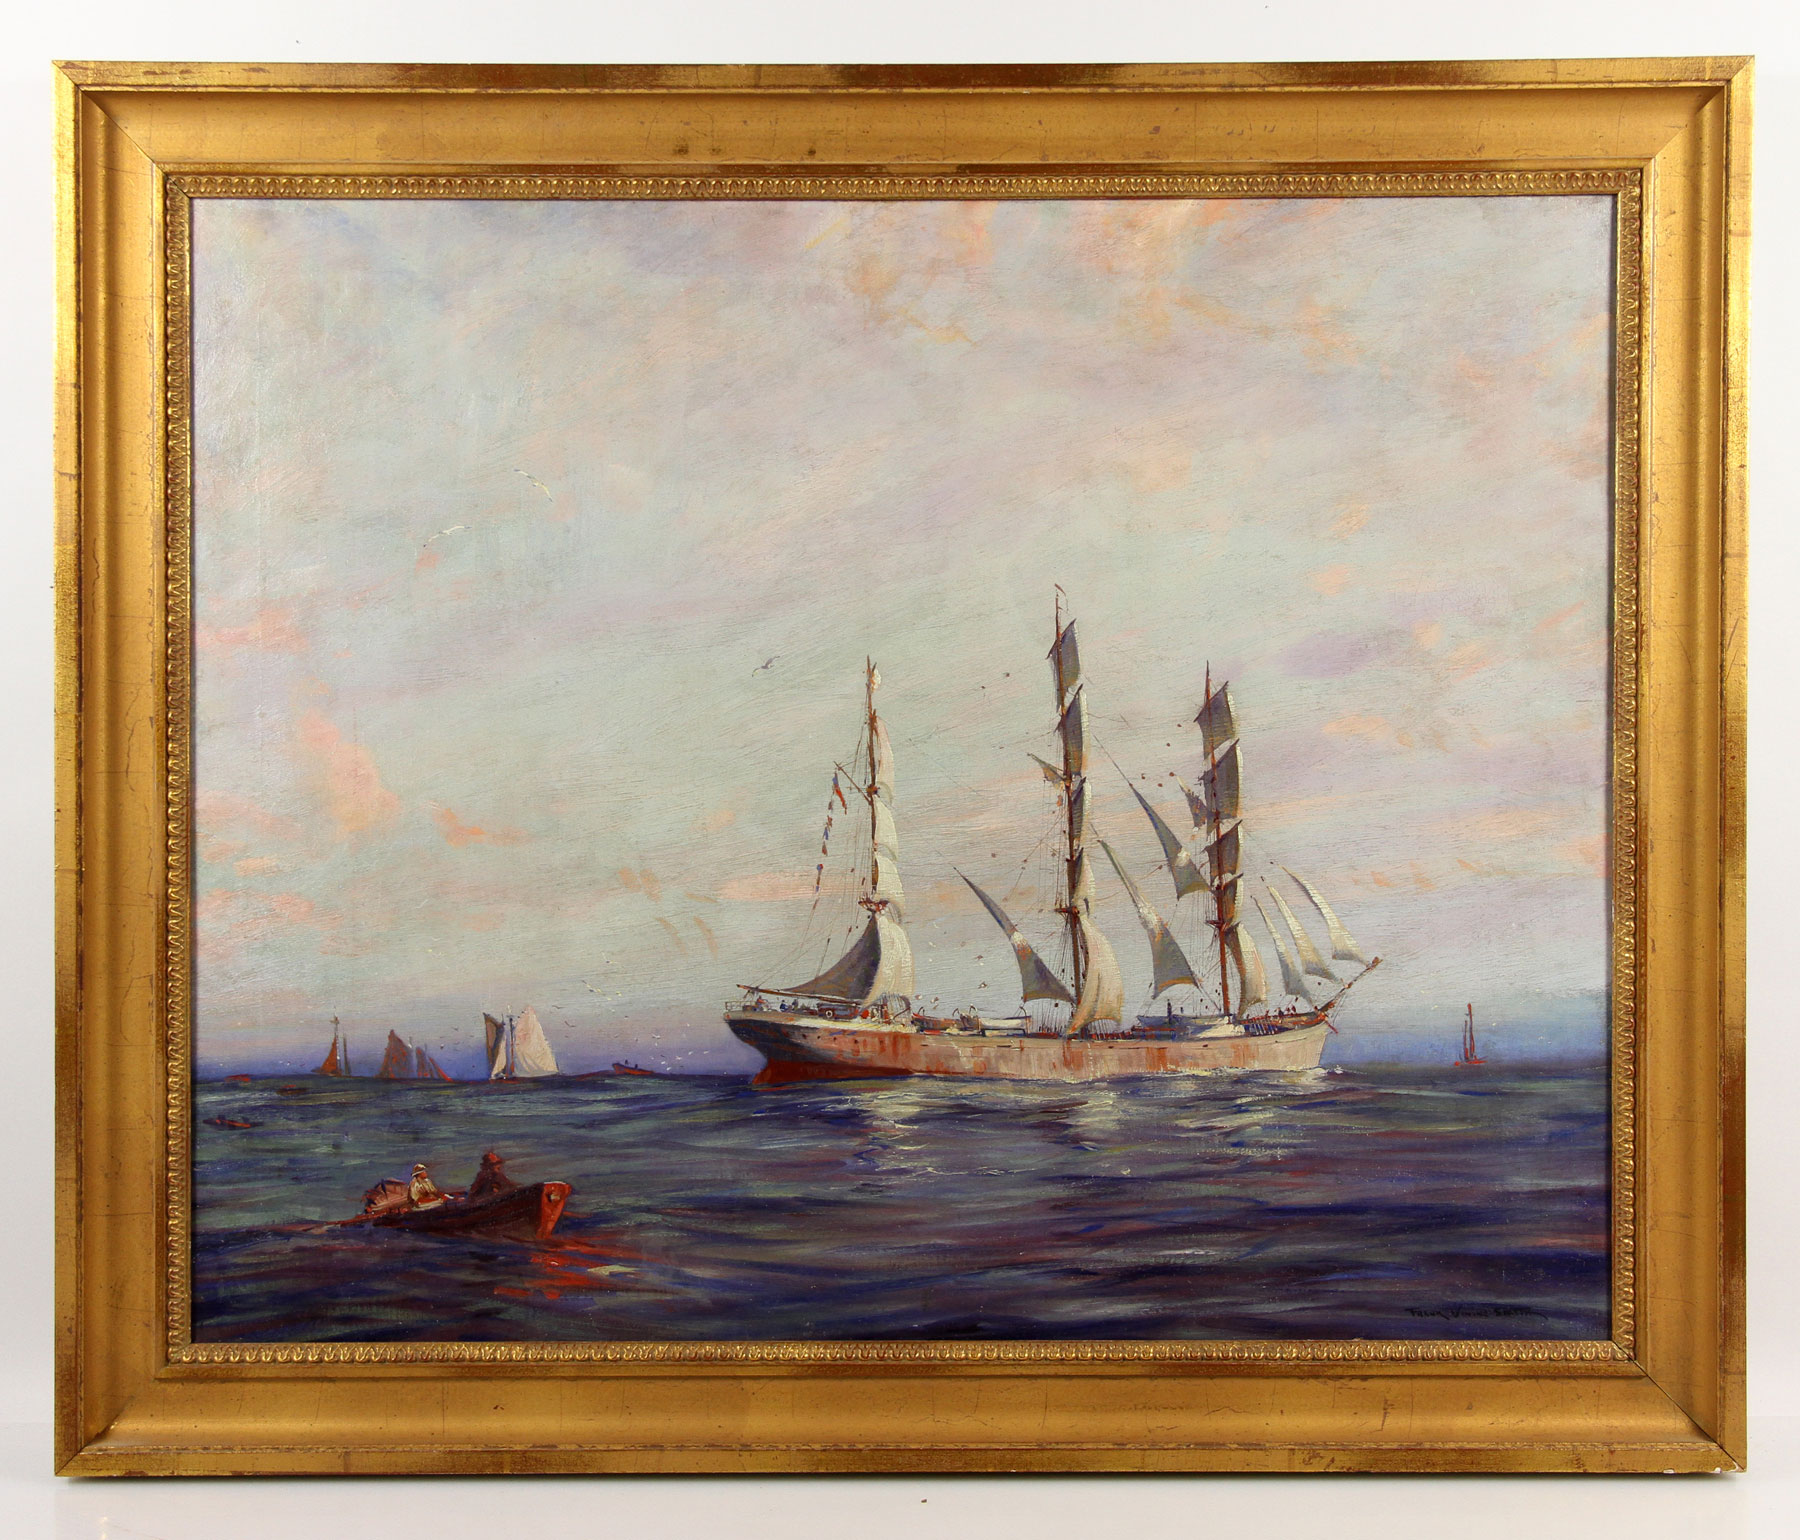 Frank Vining Smith, Three Masted Ship, Oil on Canvas